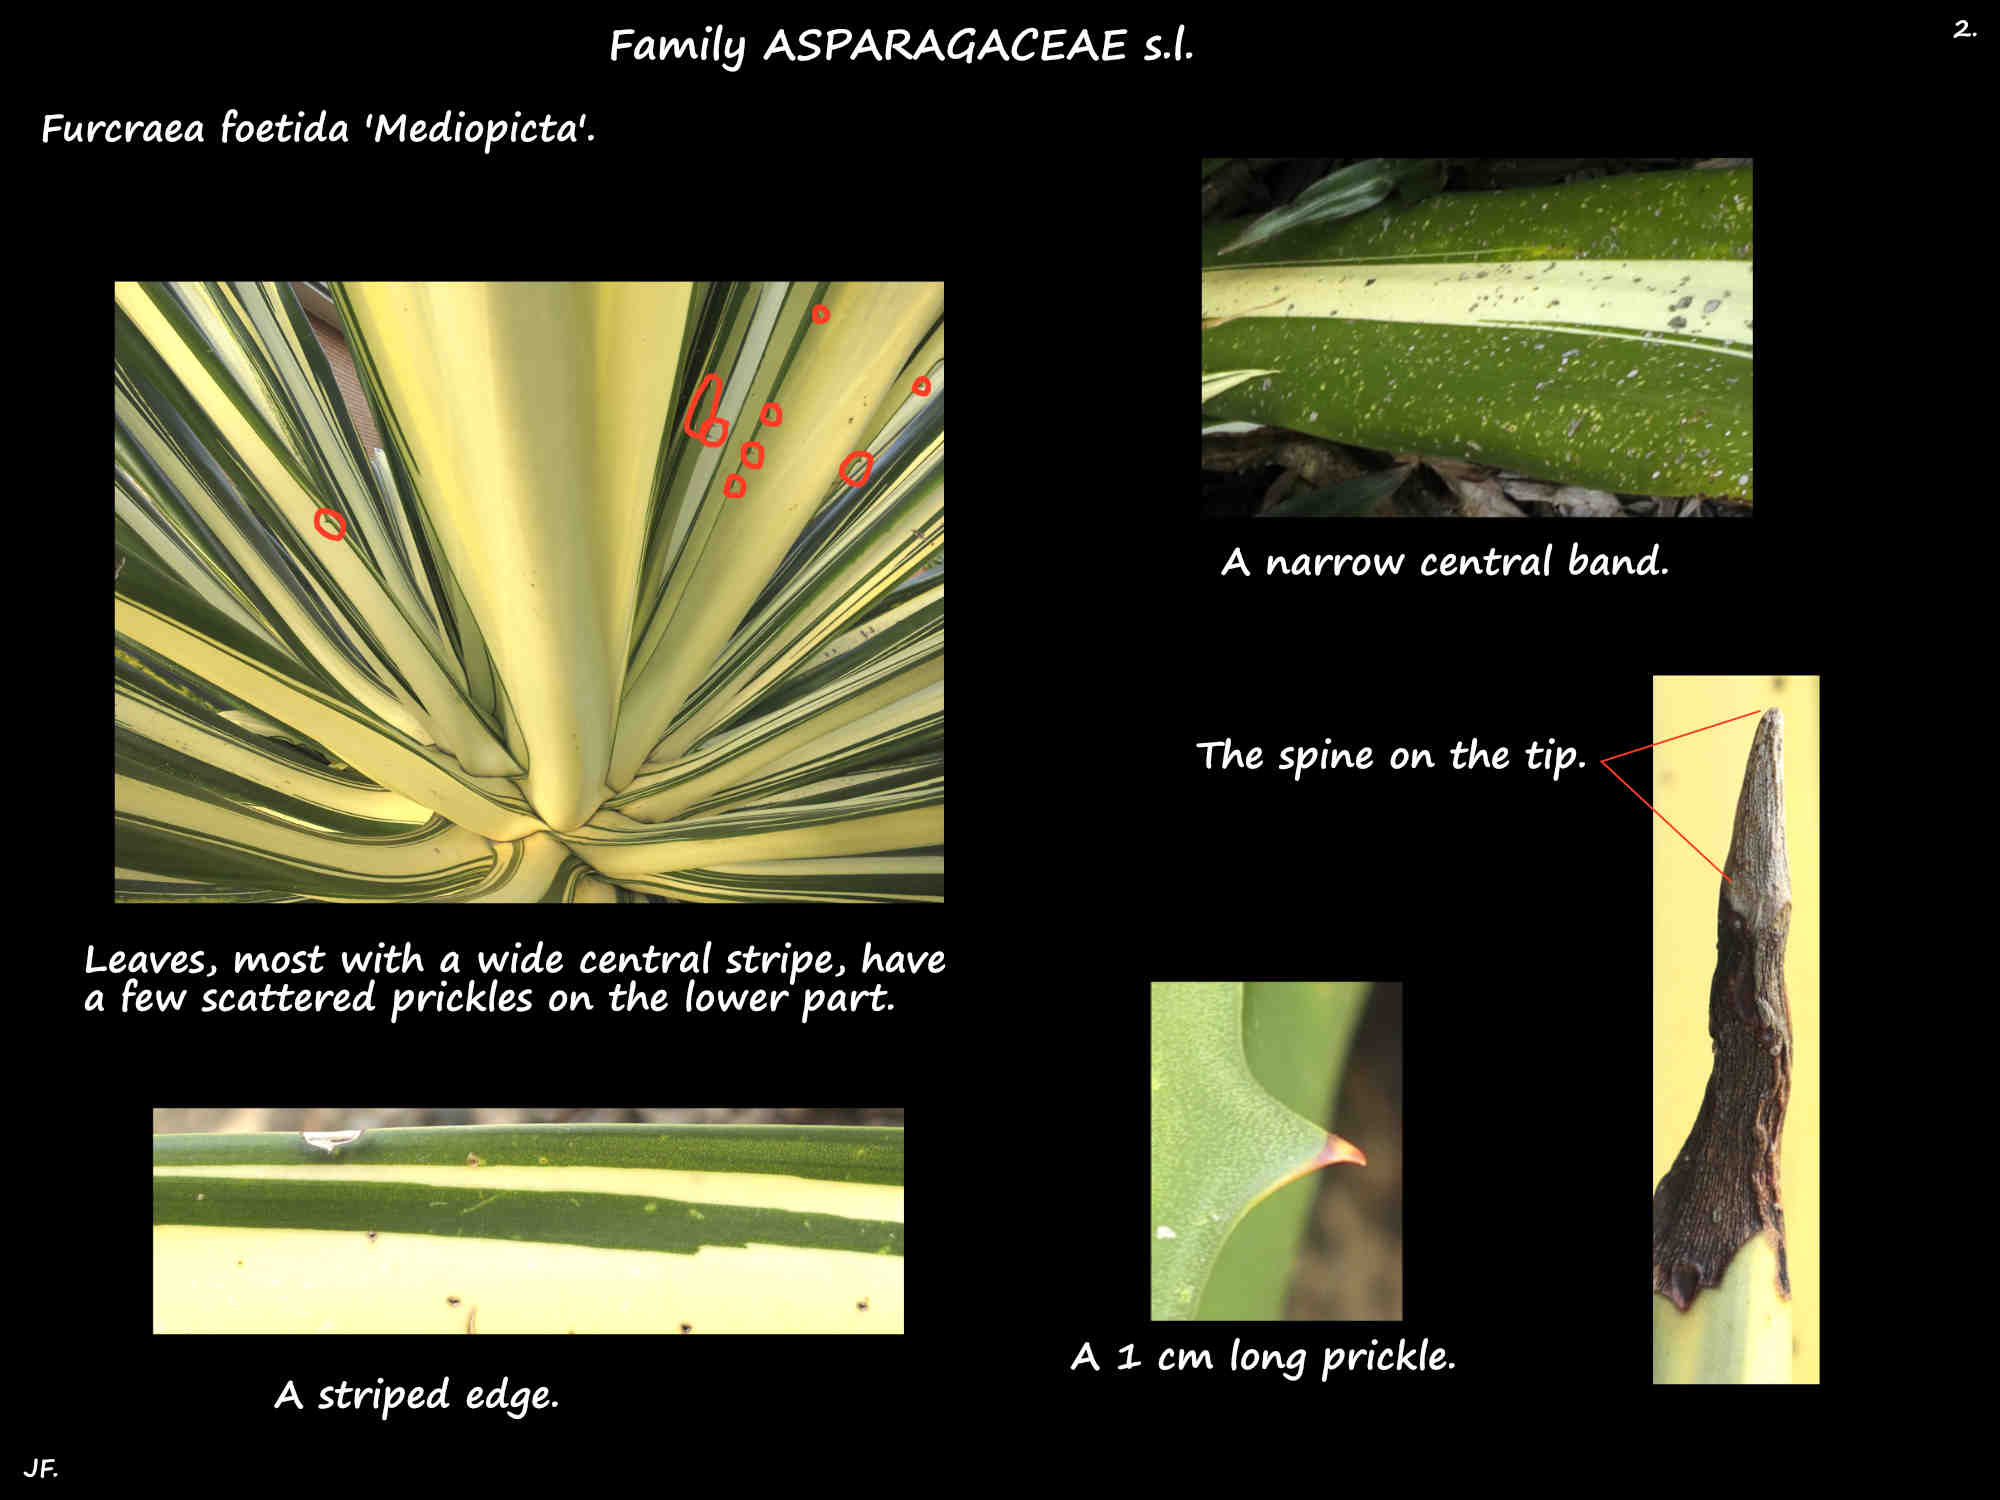 2 Prickles & the central cream strip on Furcraea foetida 'Mediopicta' leaves